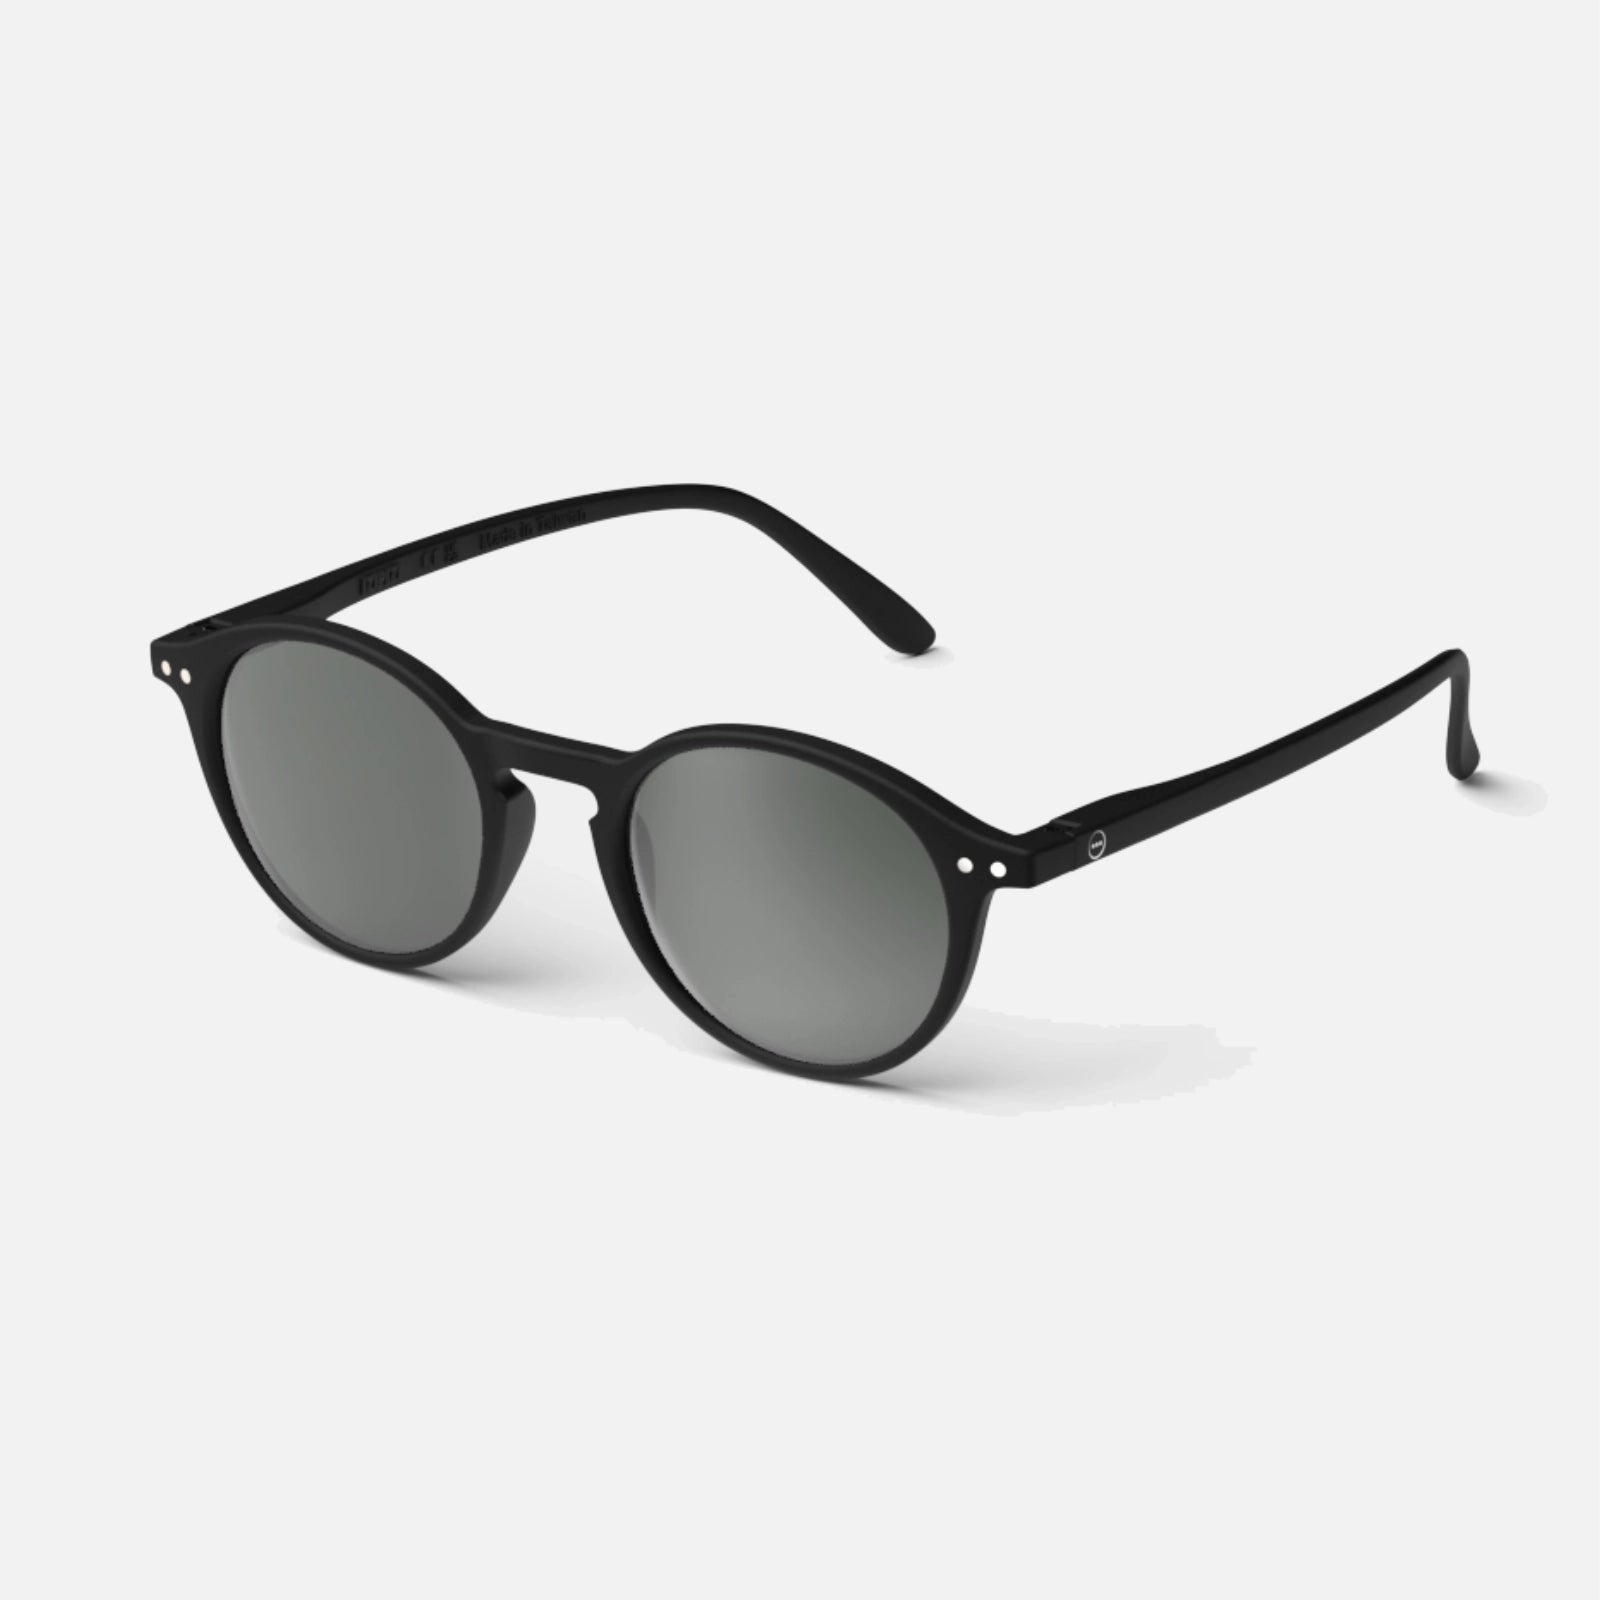 Model D solbriller fra Izipizi i sort